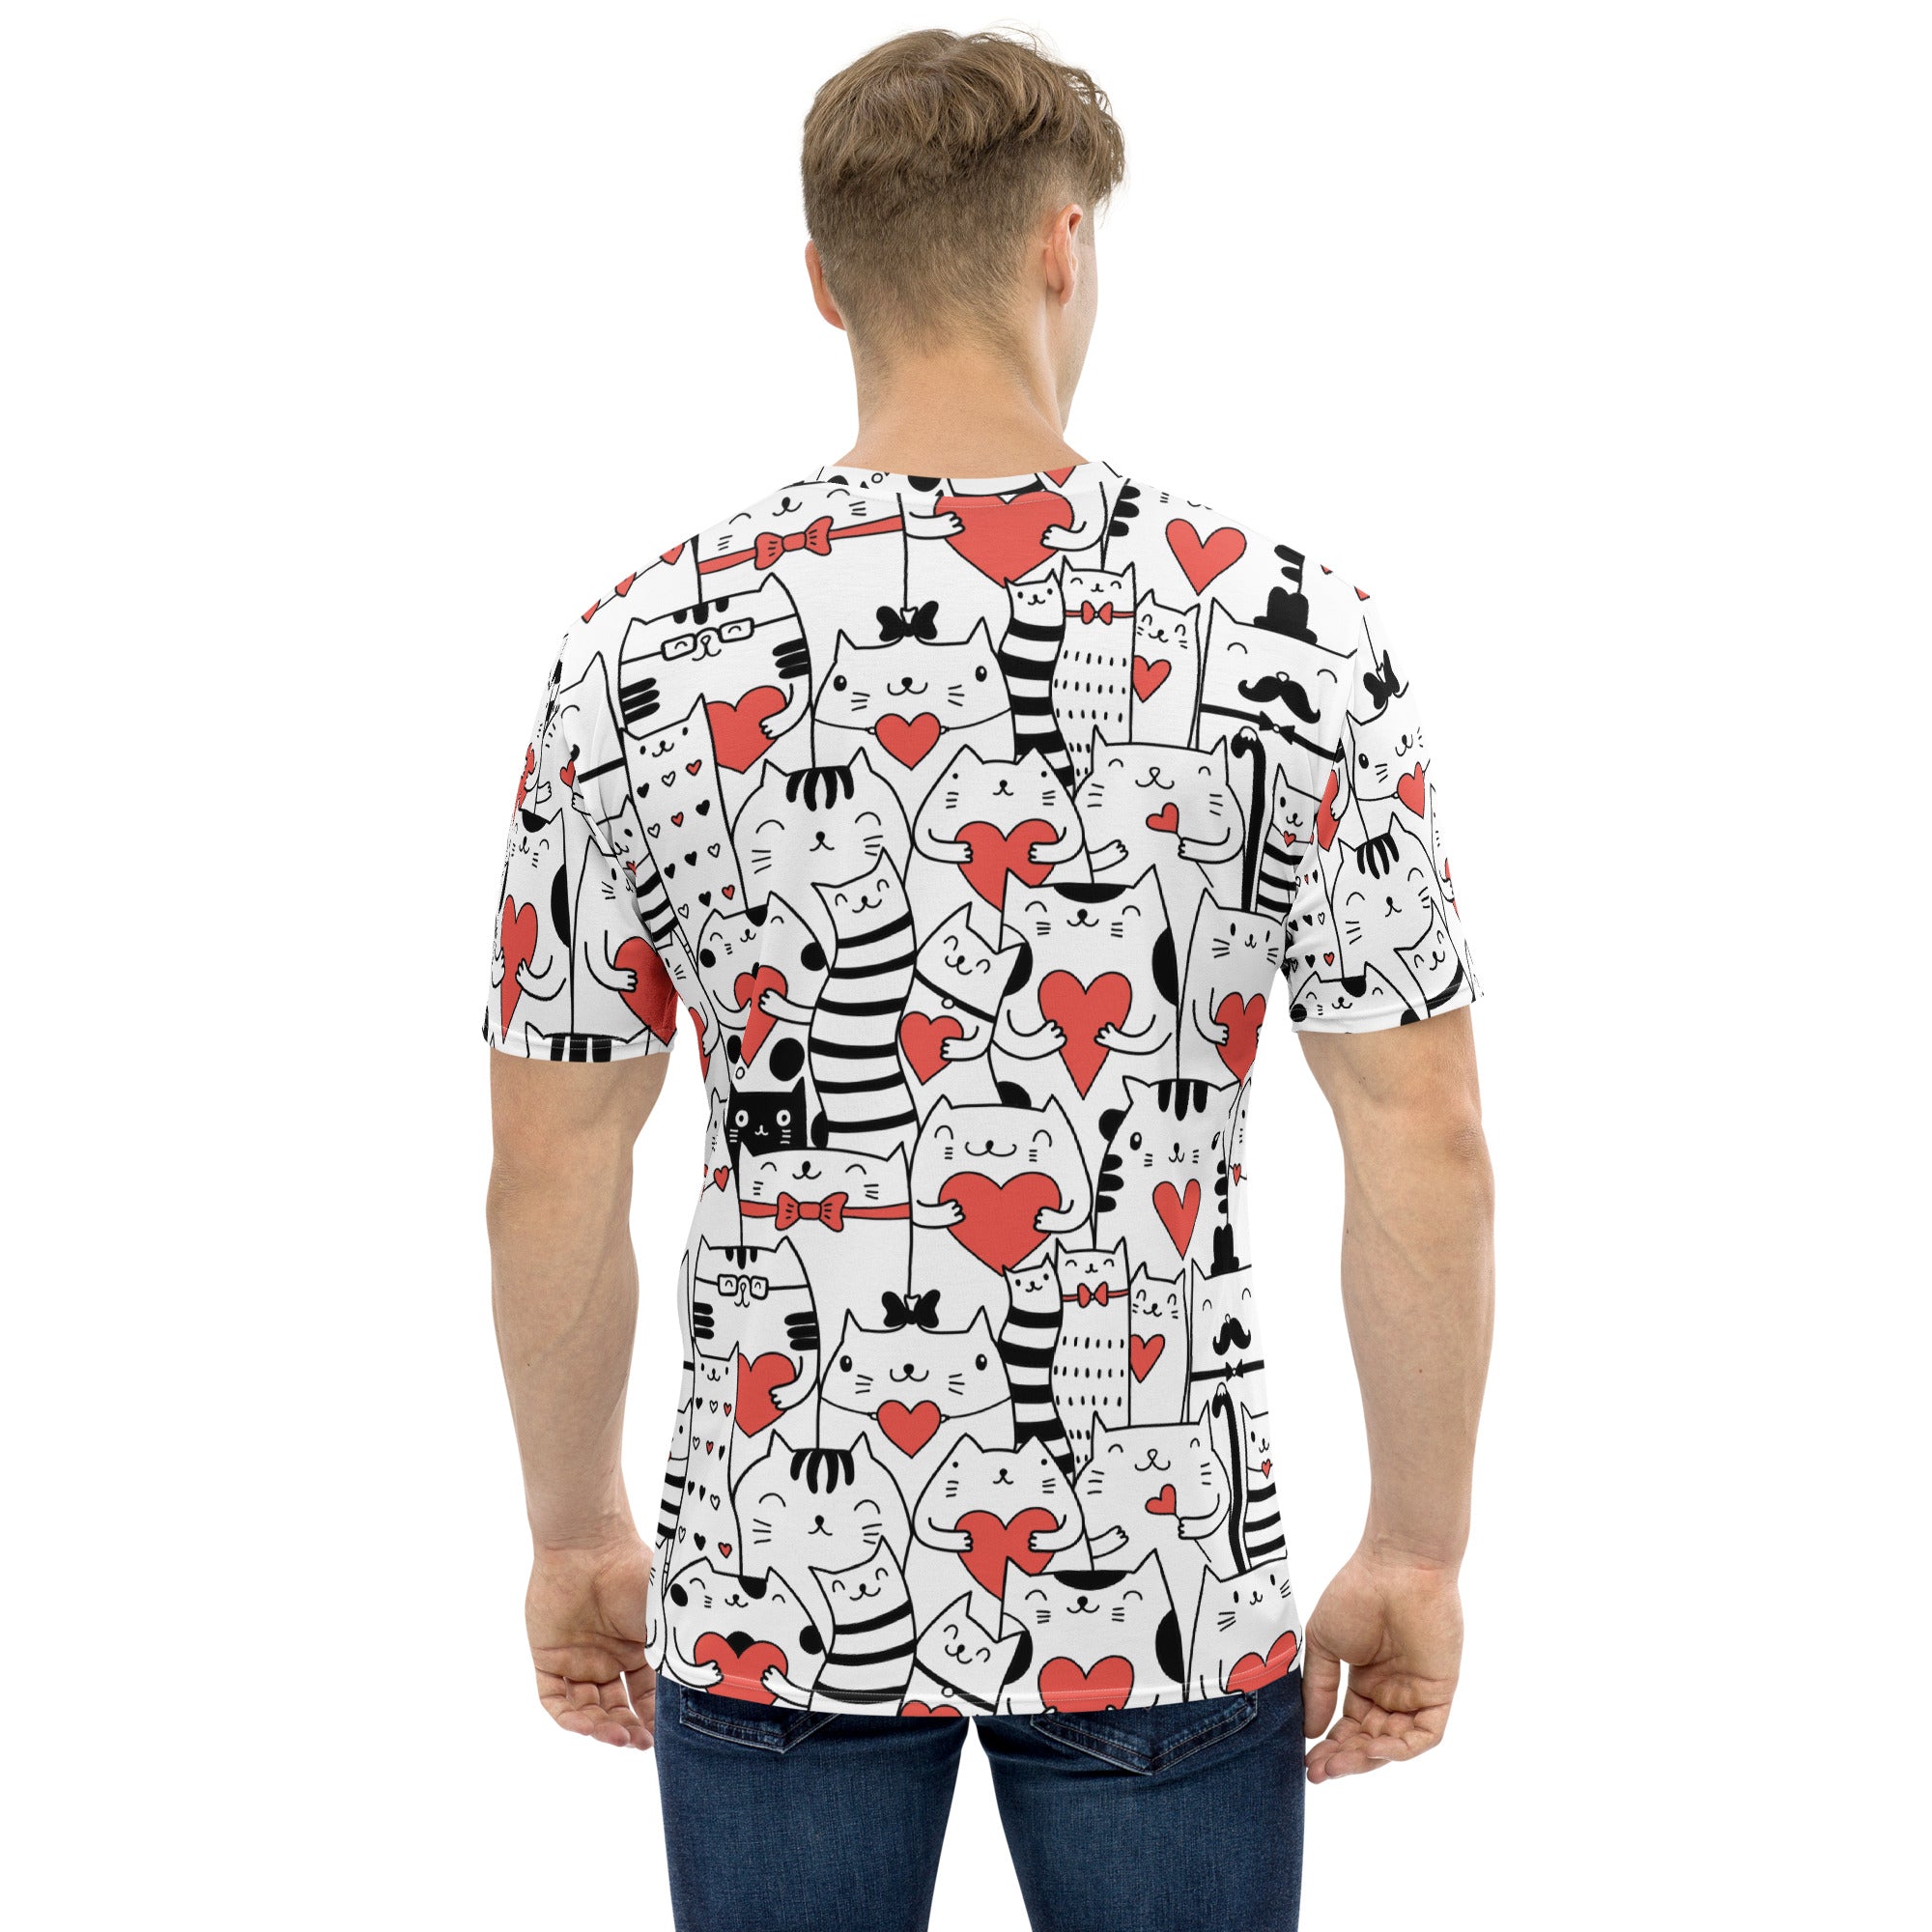 Kitties in Love Men's T-shirt